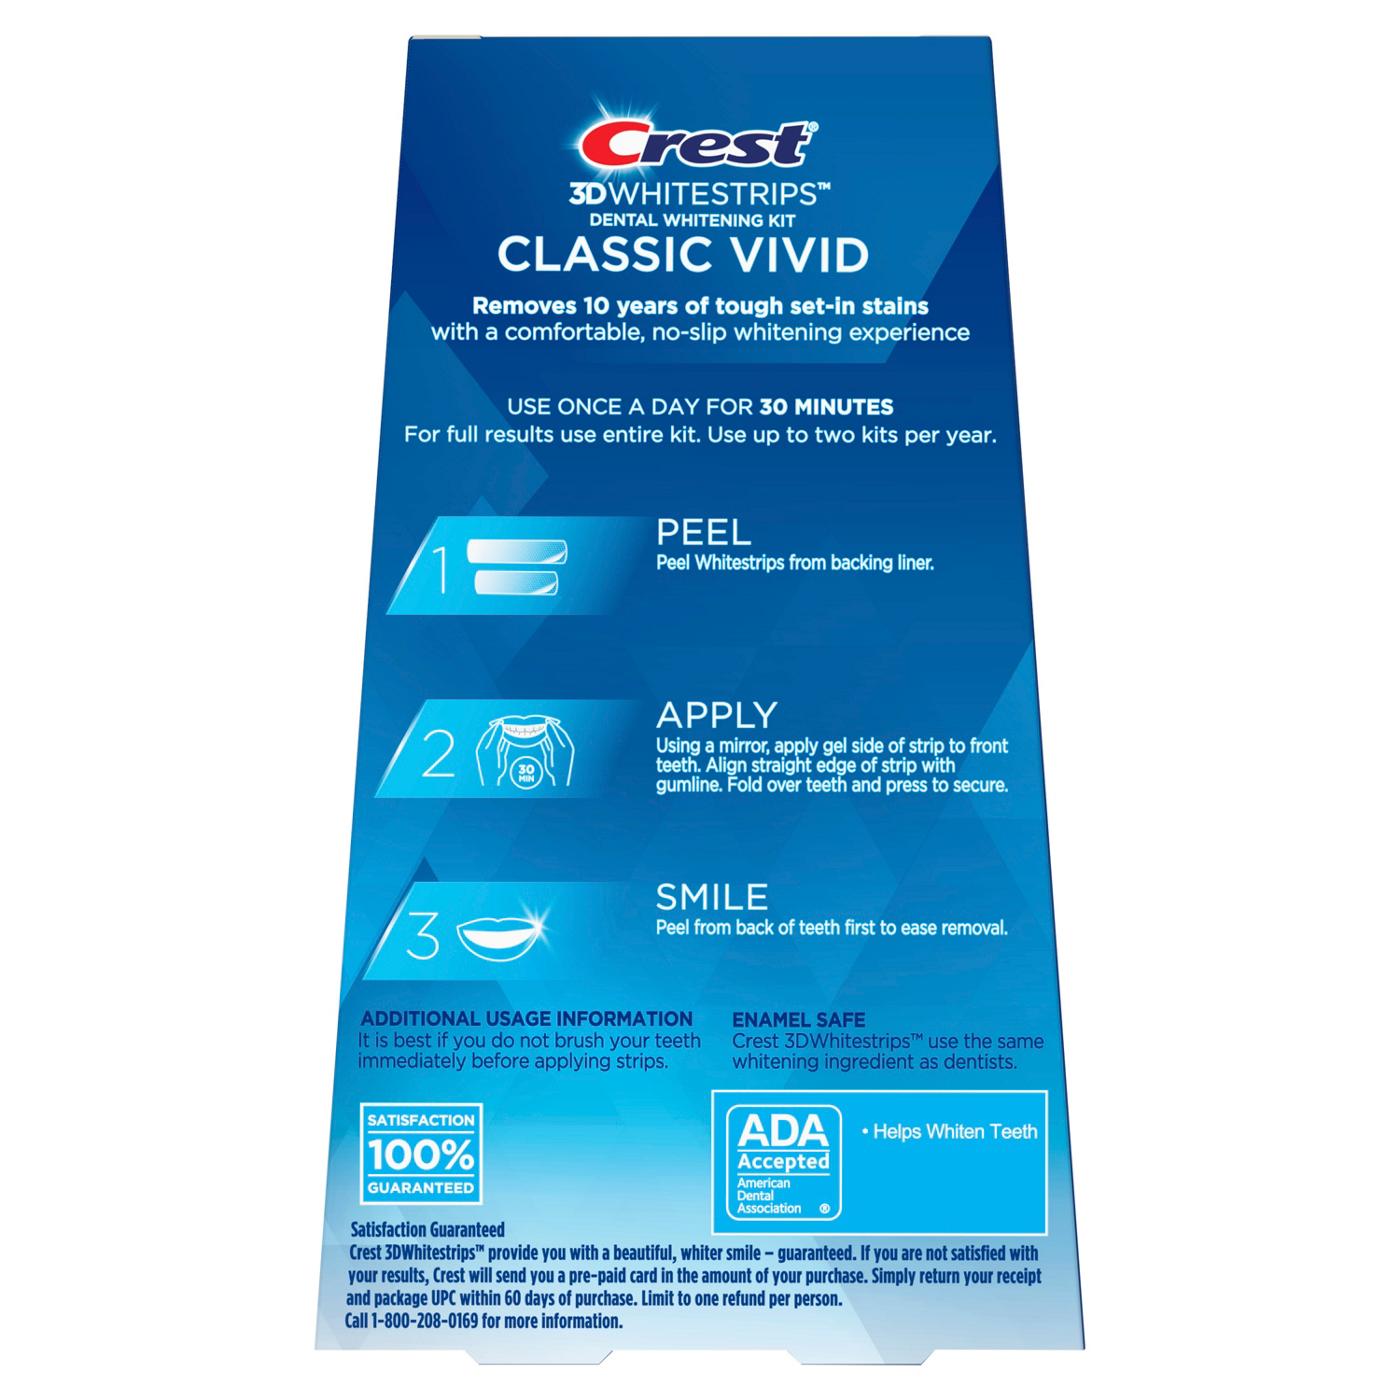 Crest 3DWhitestrips Dental Whitening Kit - Classic Vivid; image 2 of 7